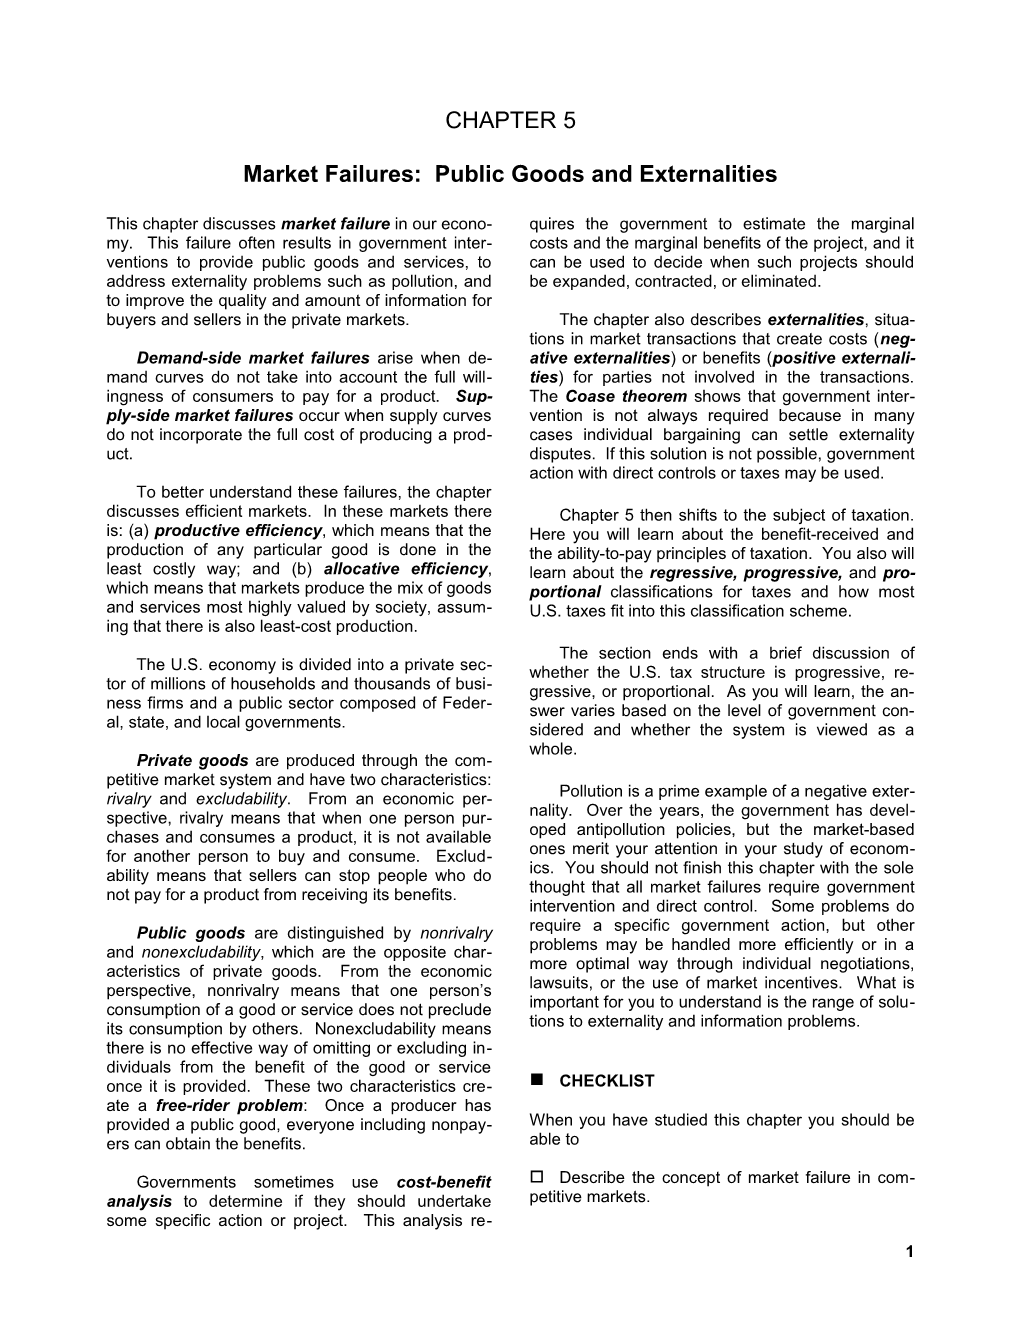 Public Goods and Externalities 1